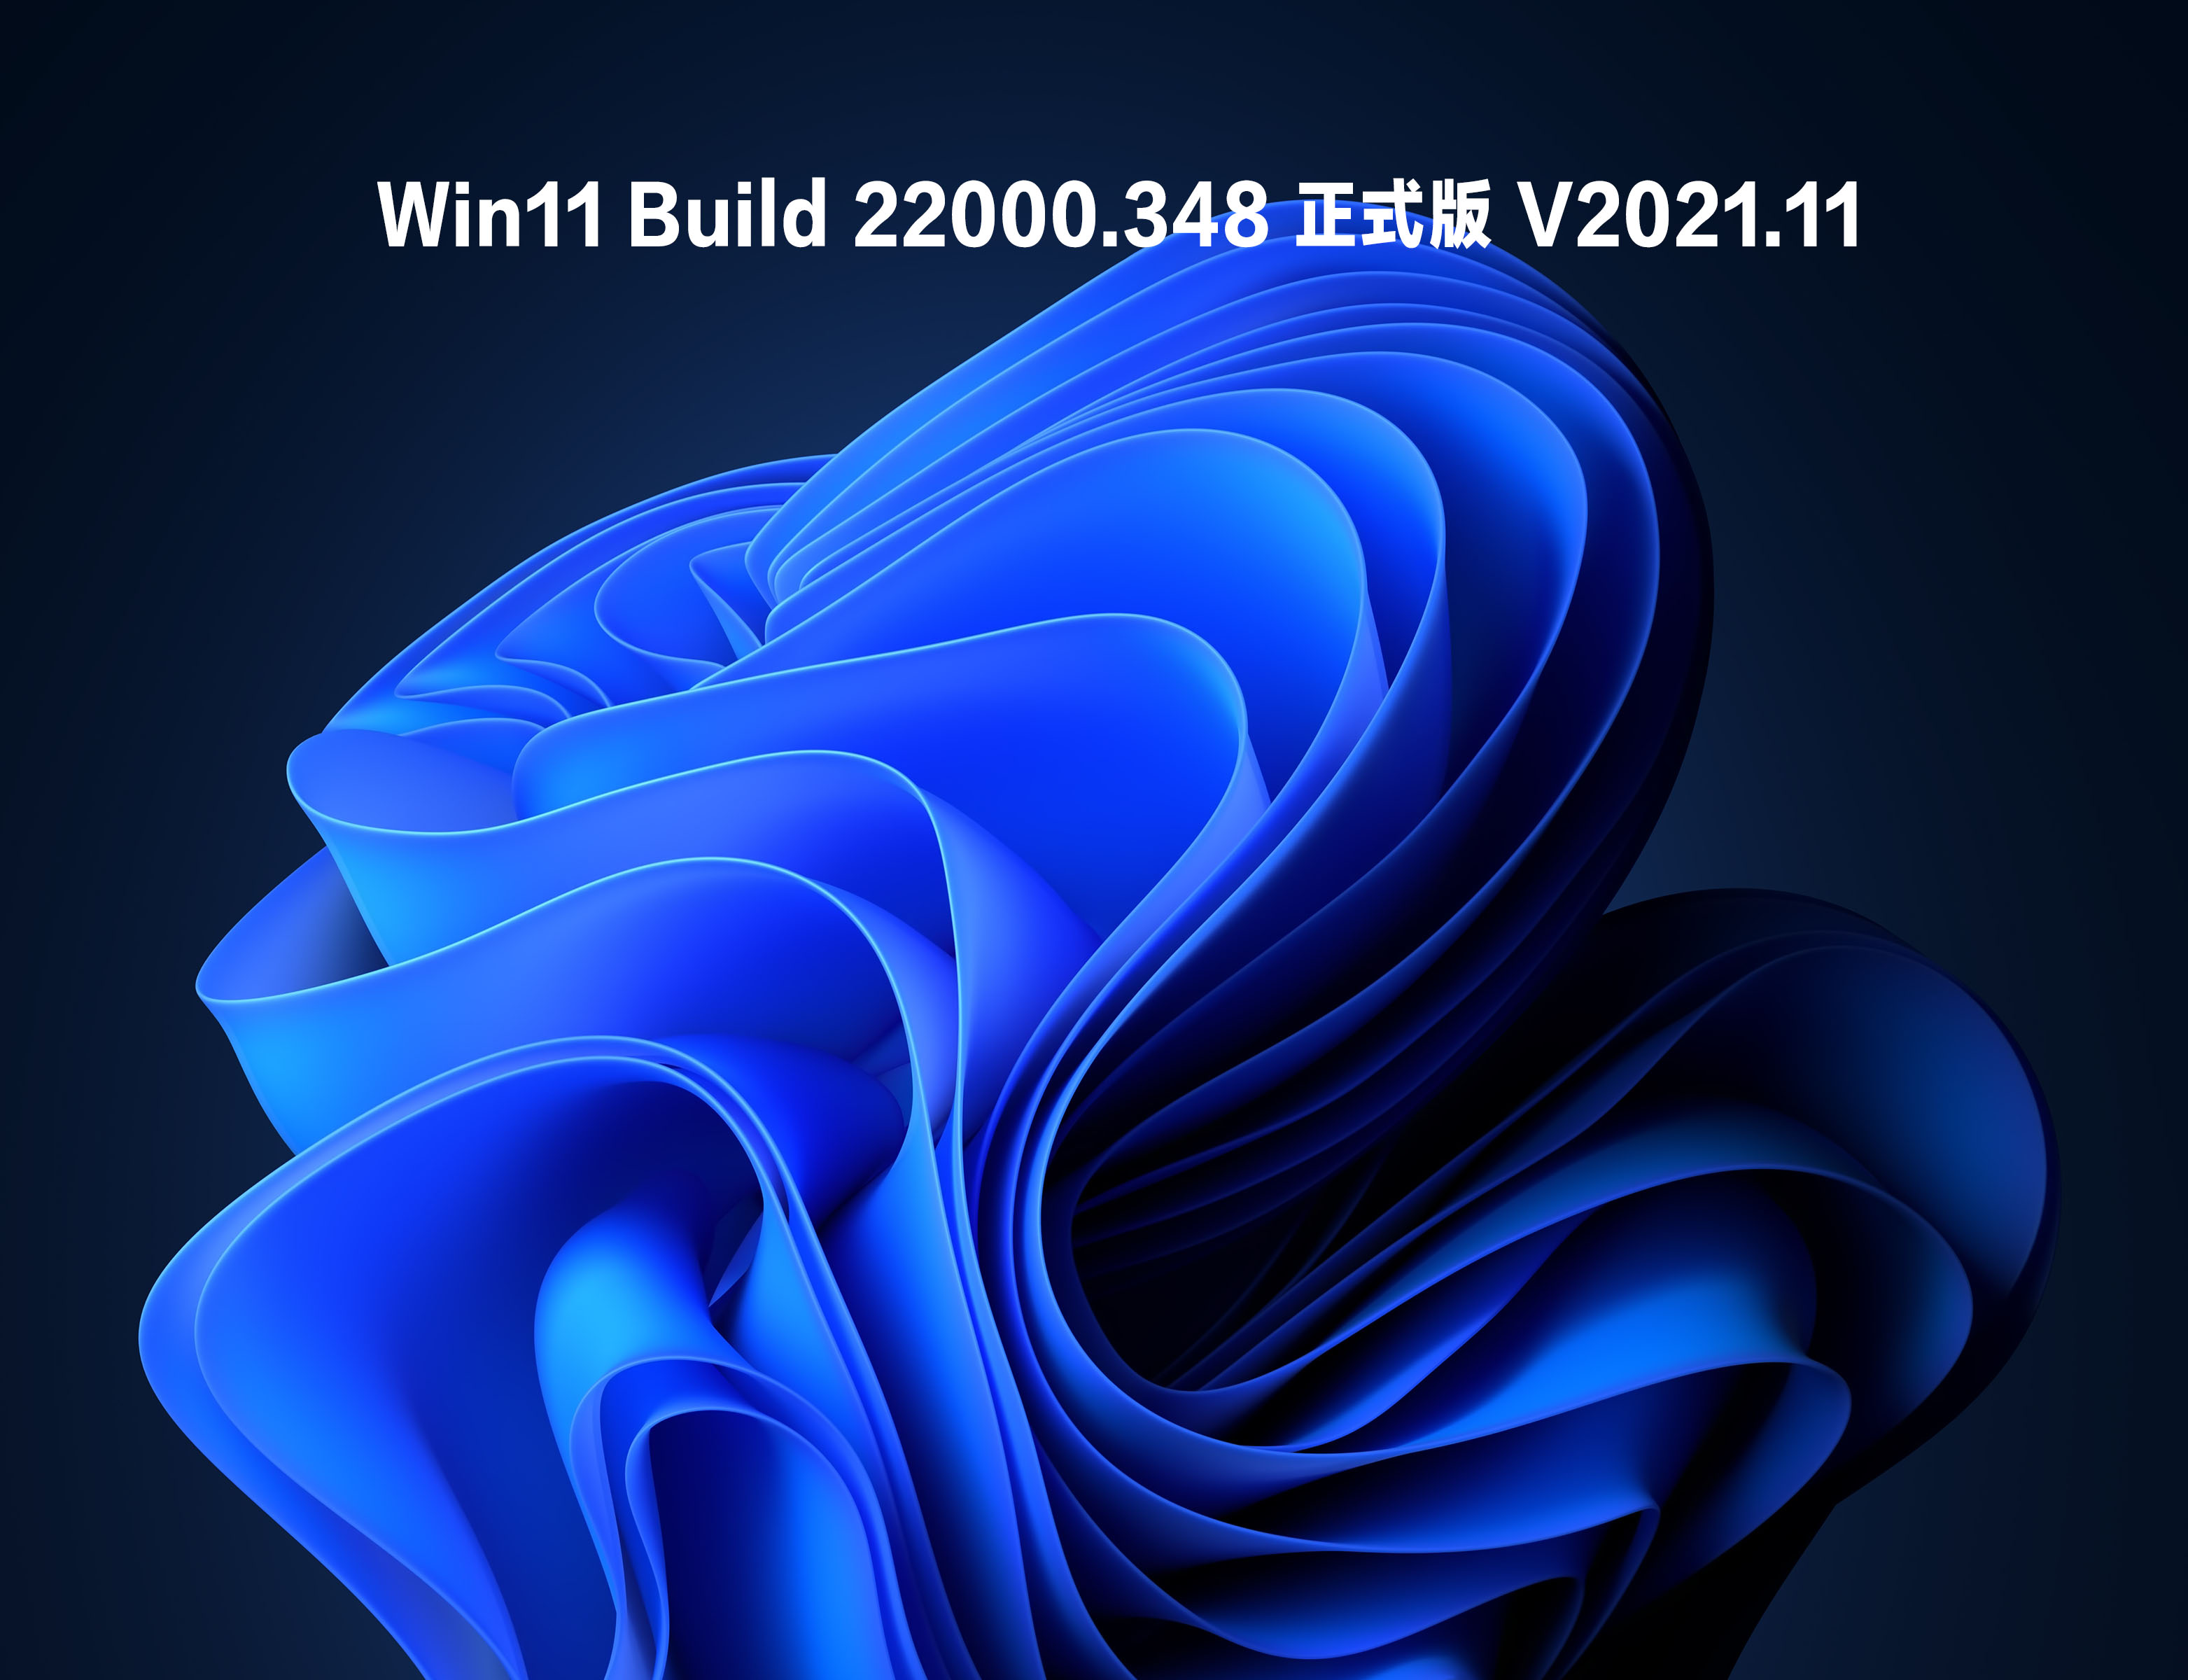 Win11 Build 22000.348 正式版中文版完整版_Win11 Build 22000.348 正式版专业版最新版